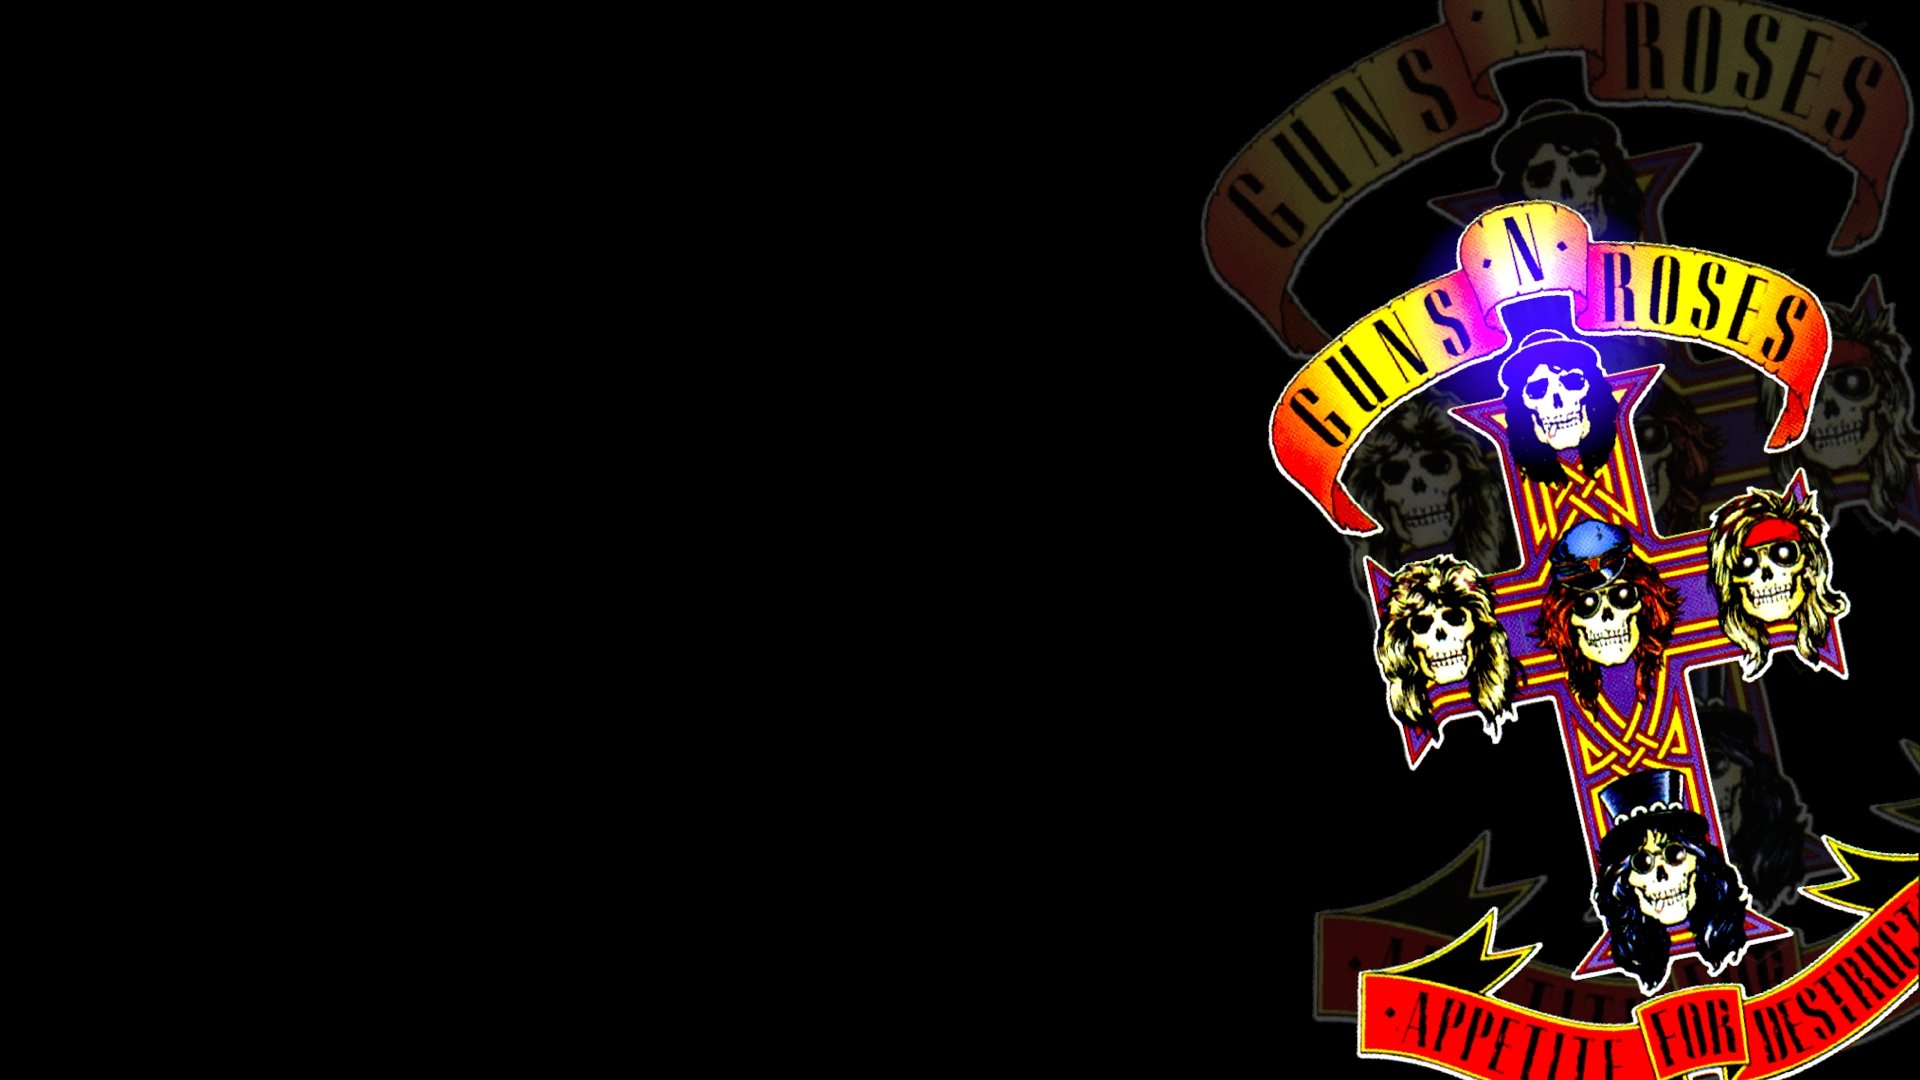 Best Guns N' Roses wallpaper ID:256858 for High Resolution 1080p desktop